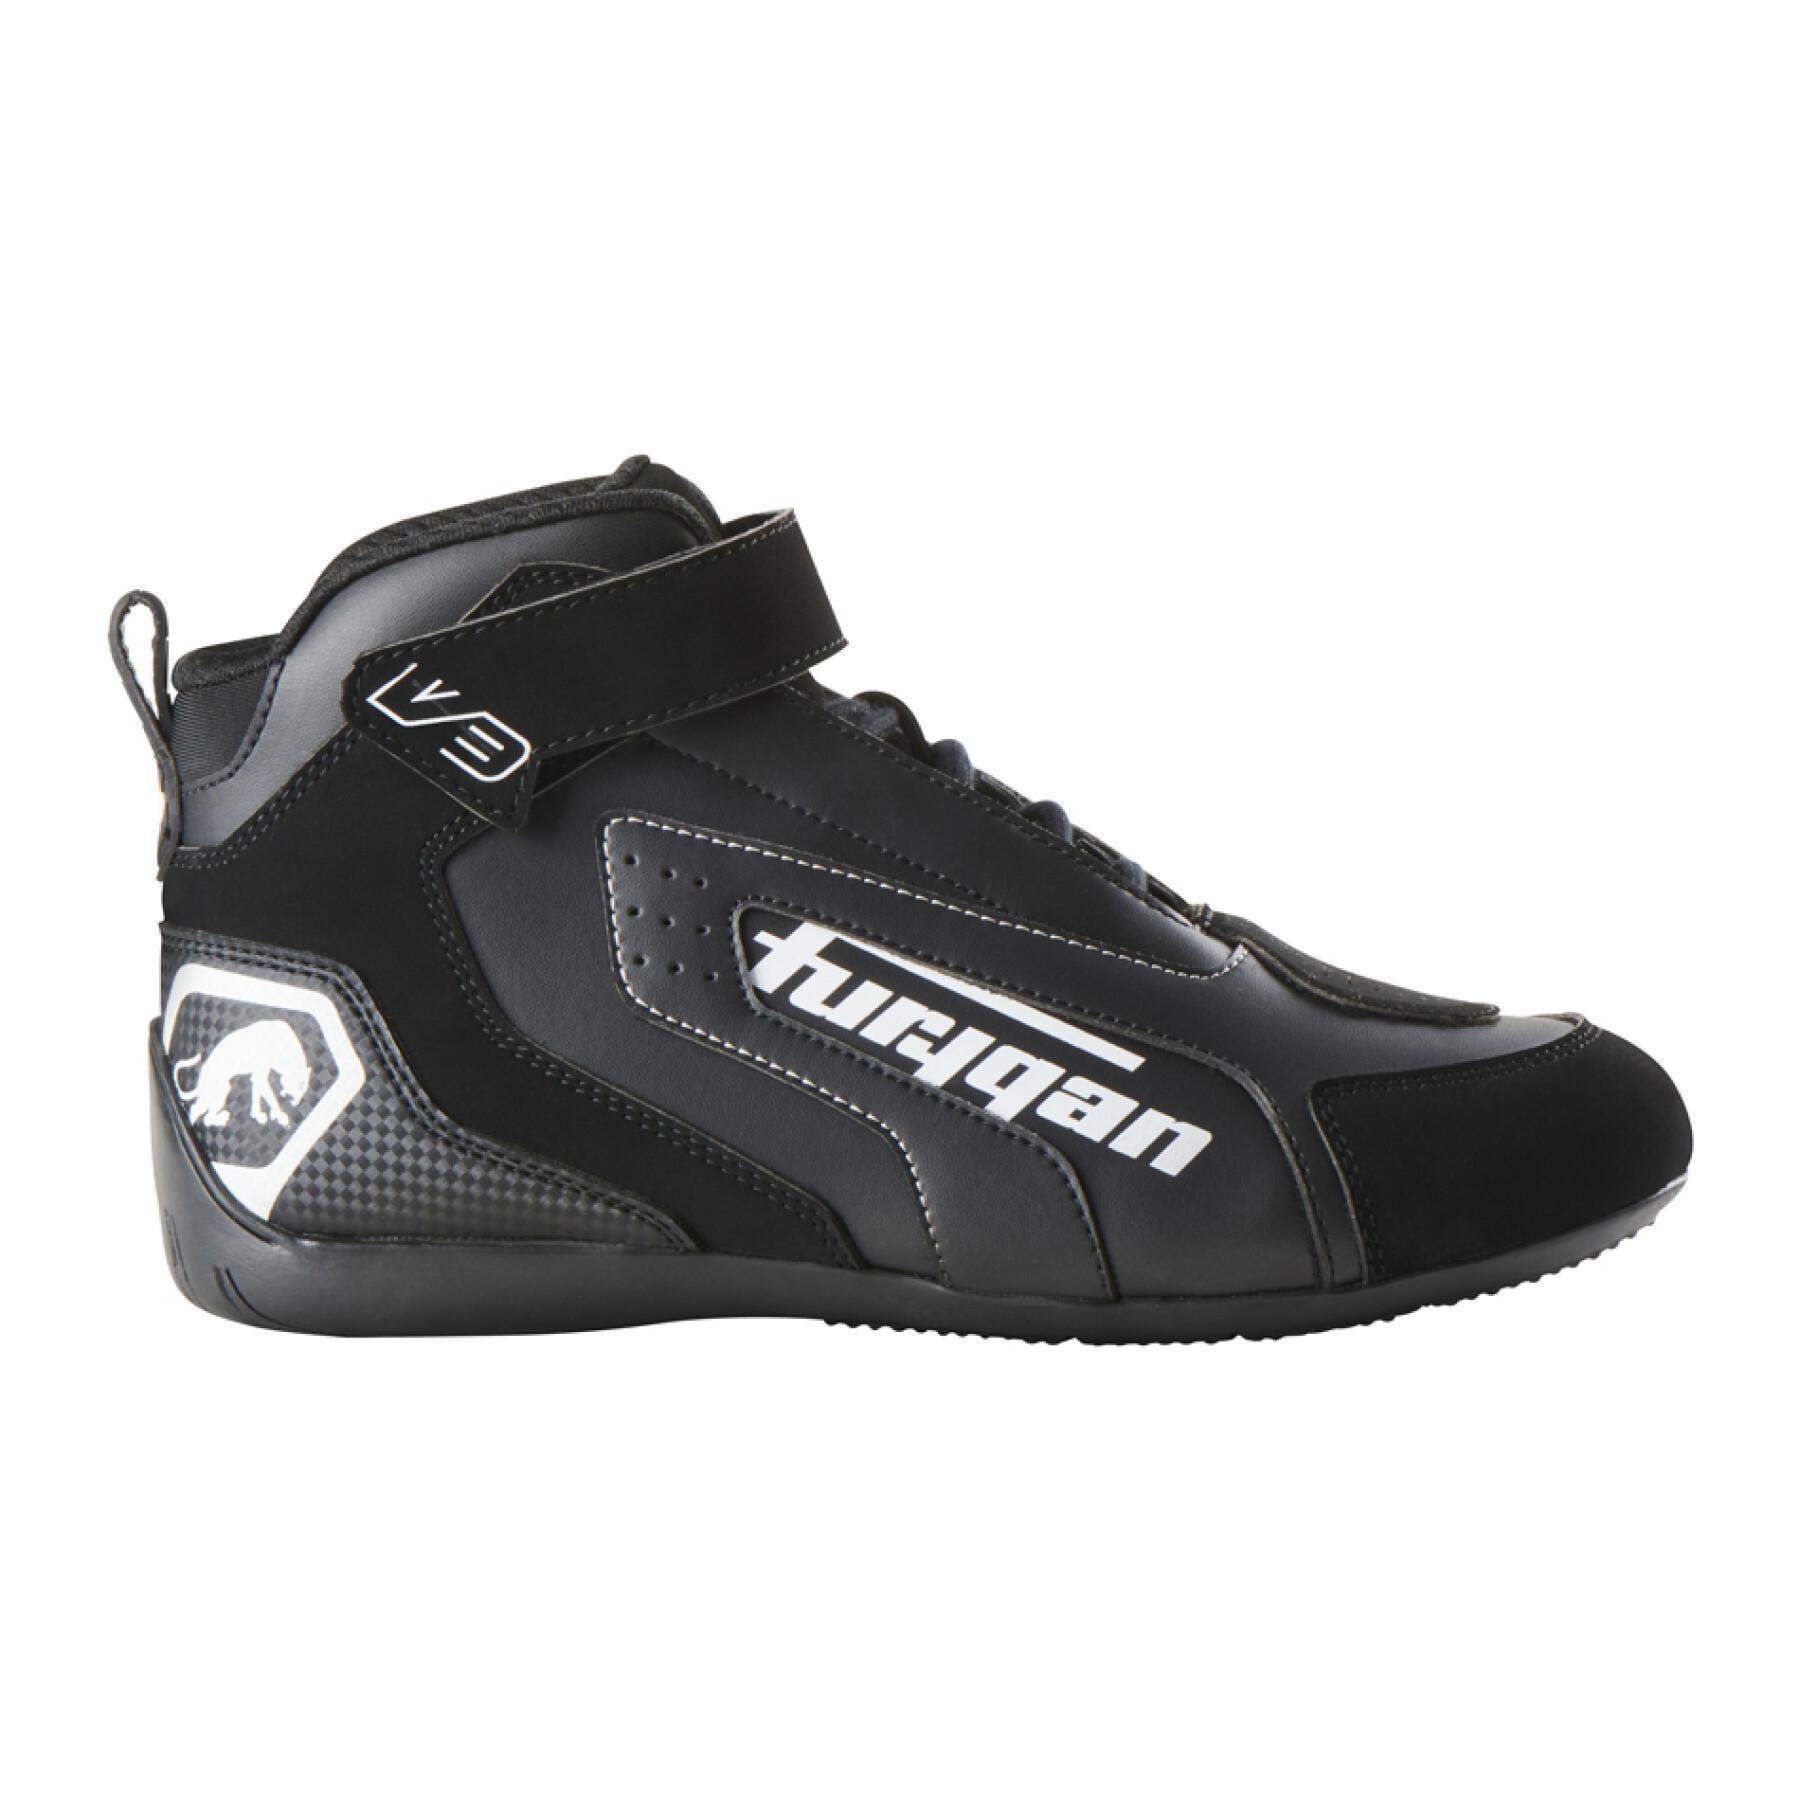 Motorcycle shoes for women Furygan V3